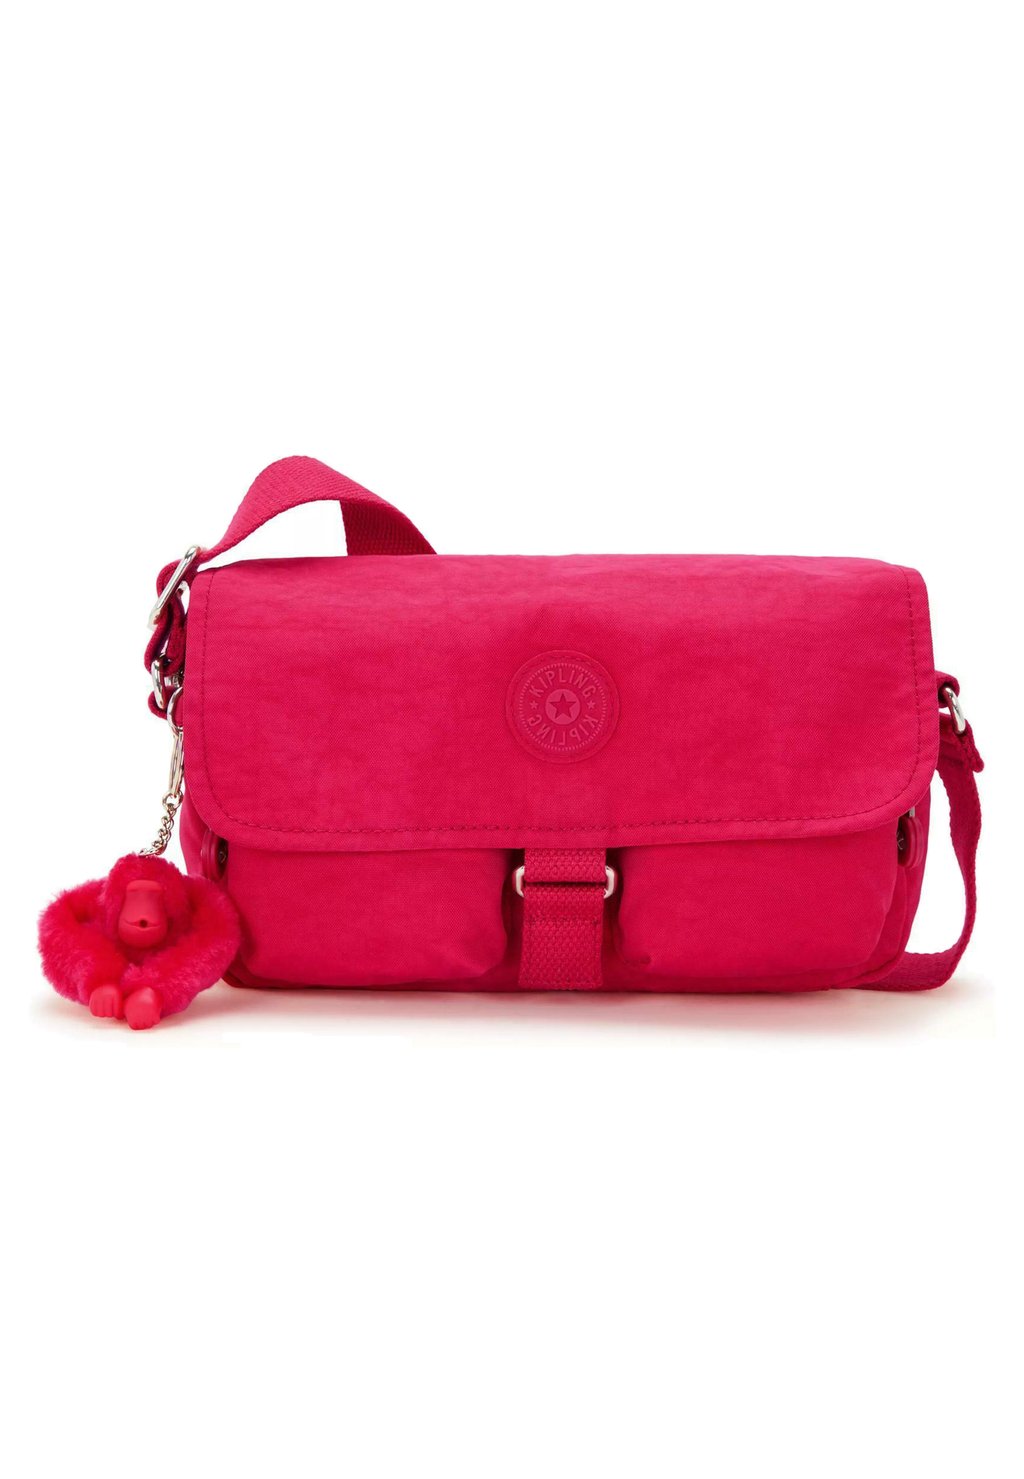 Сумка через плечо Chilly Up. Kipling, цвет confetti pink сумка через плечо aras kipling цвет valentine pink